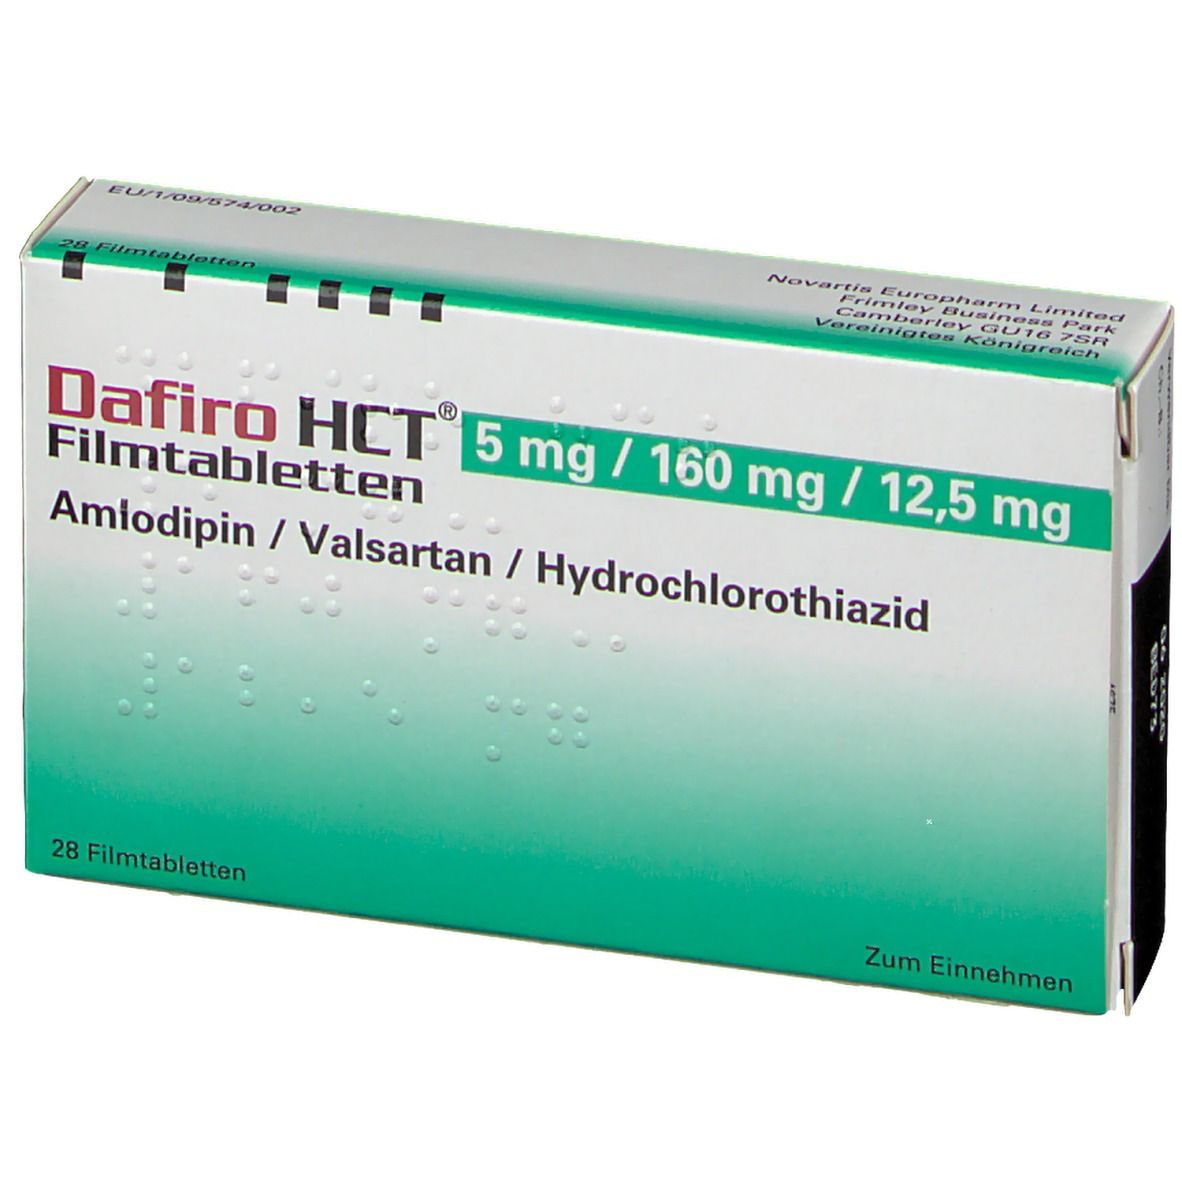 Dafiro HCT® 5 mg/160 mg/12,5 mg